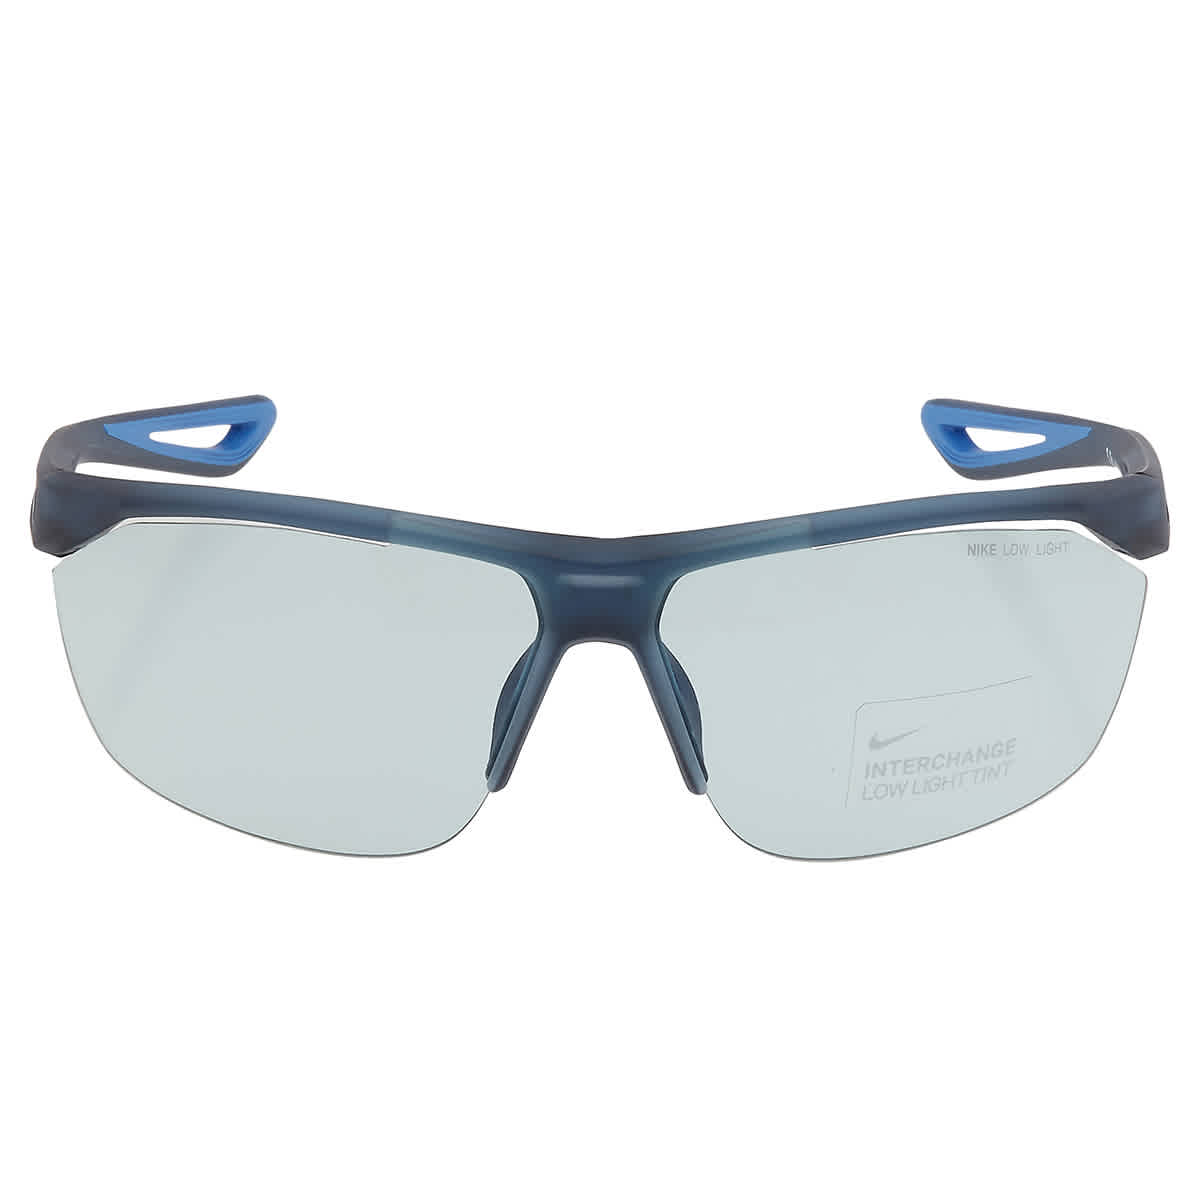 Nike Blue Wrap Unisex Sunglasses NIKE TAILWIND E EV0946 082 70 - image 1 of 3